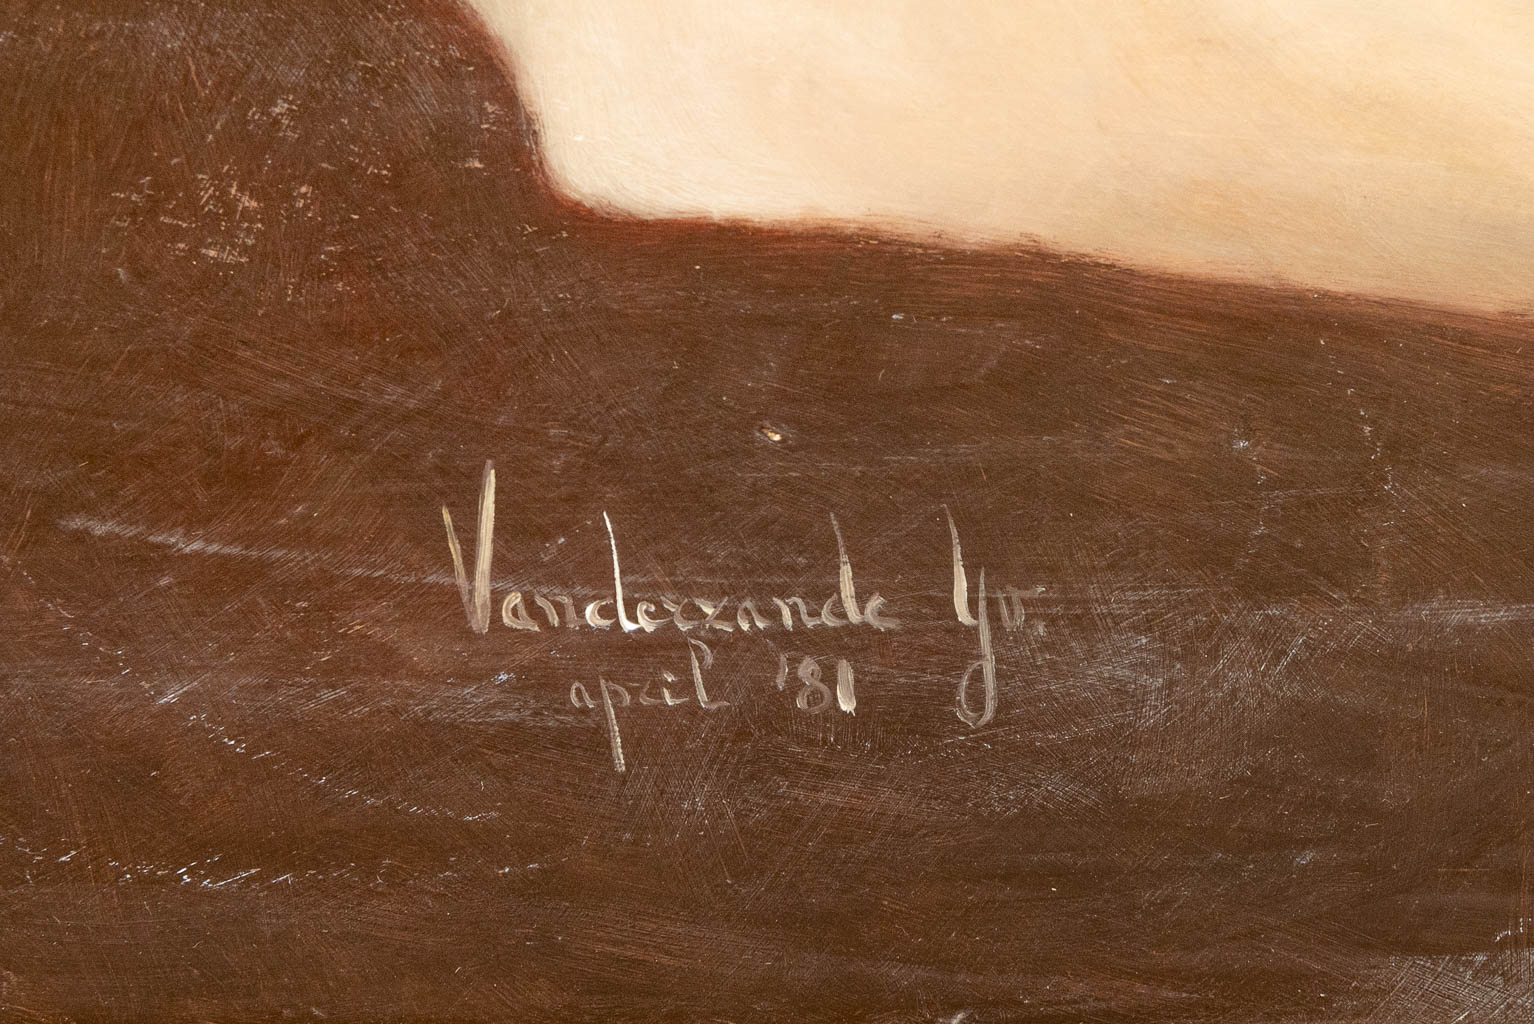 Yvo VANDERZANDE (XX) 'The Caroussel' a painting, oil on panel. 1981. (144 x 96 cm)